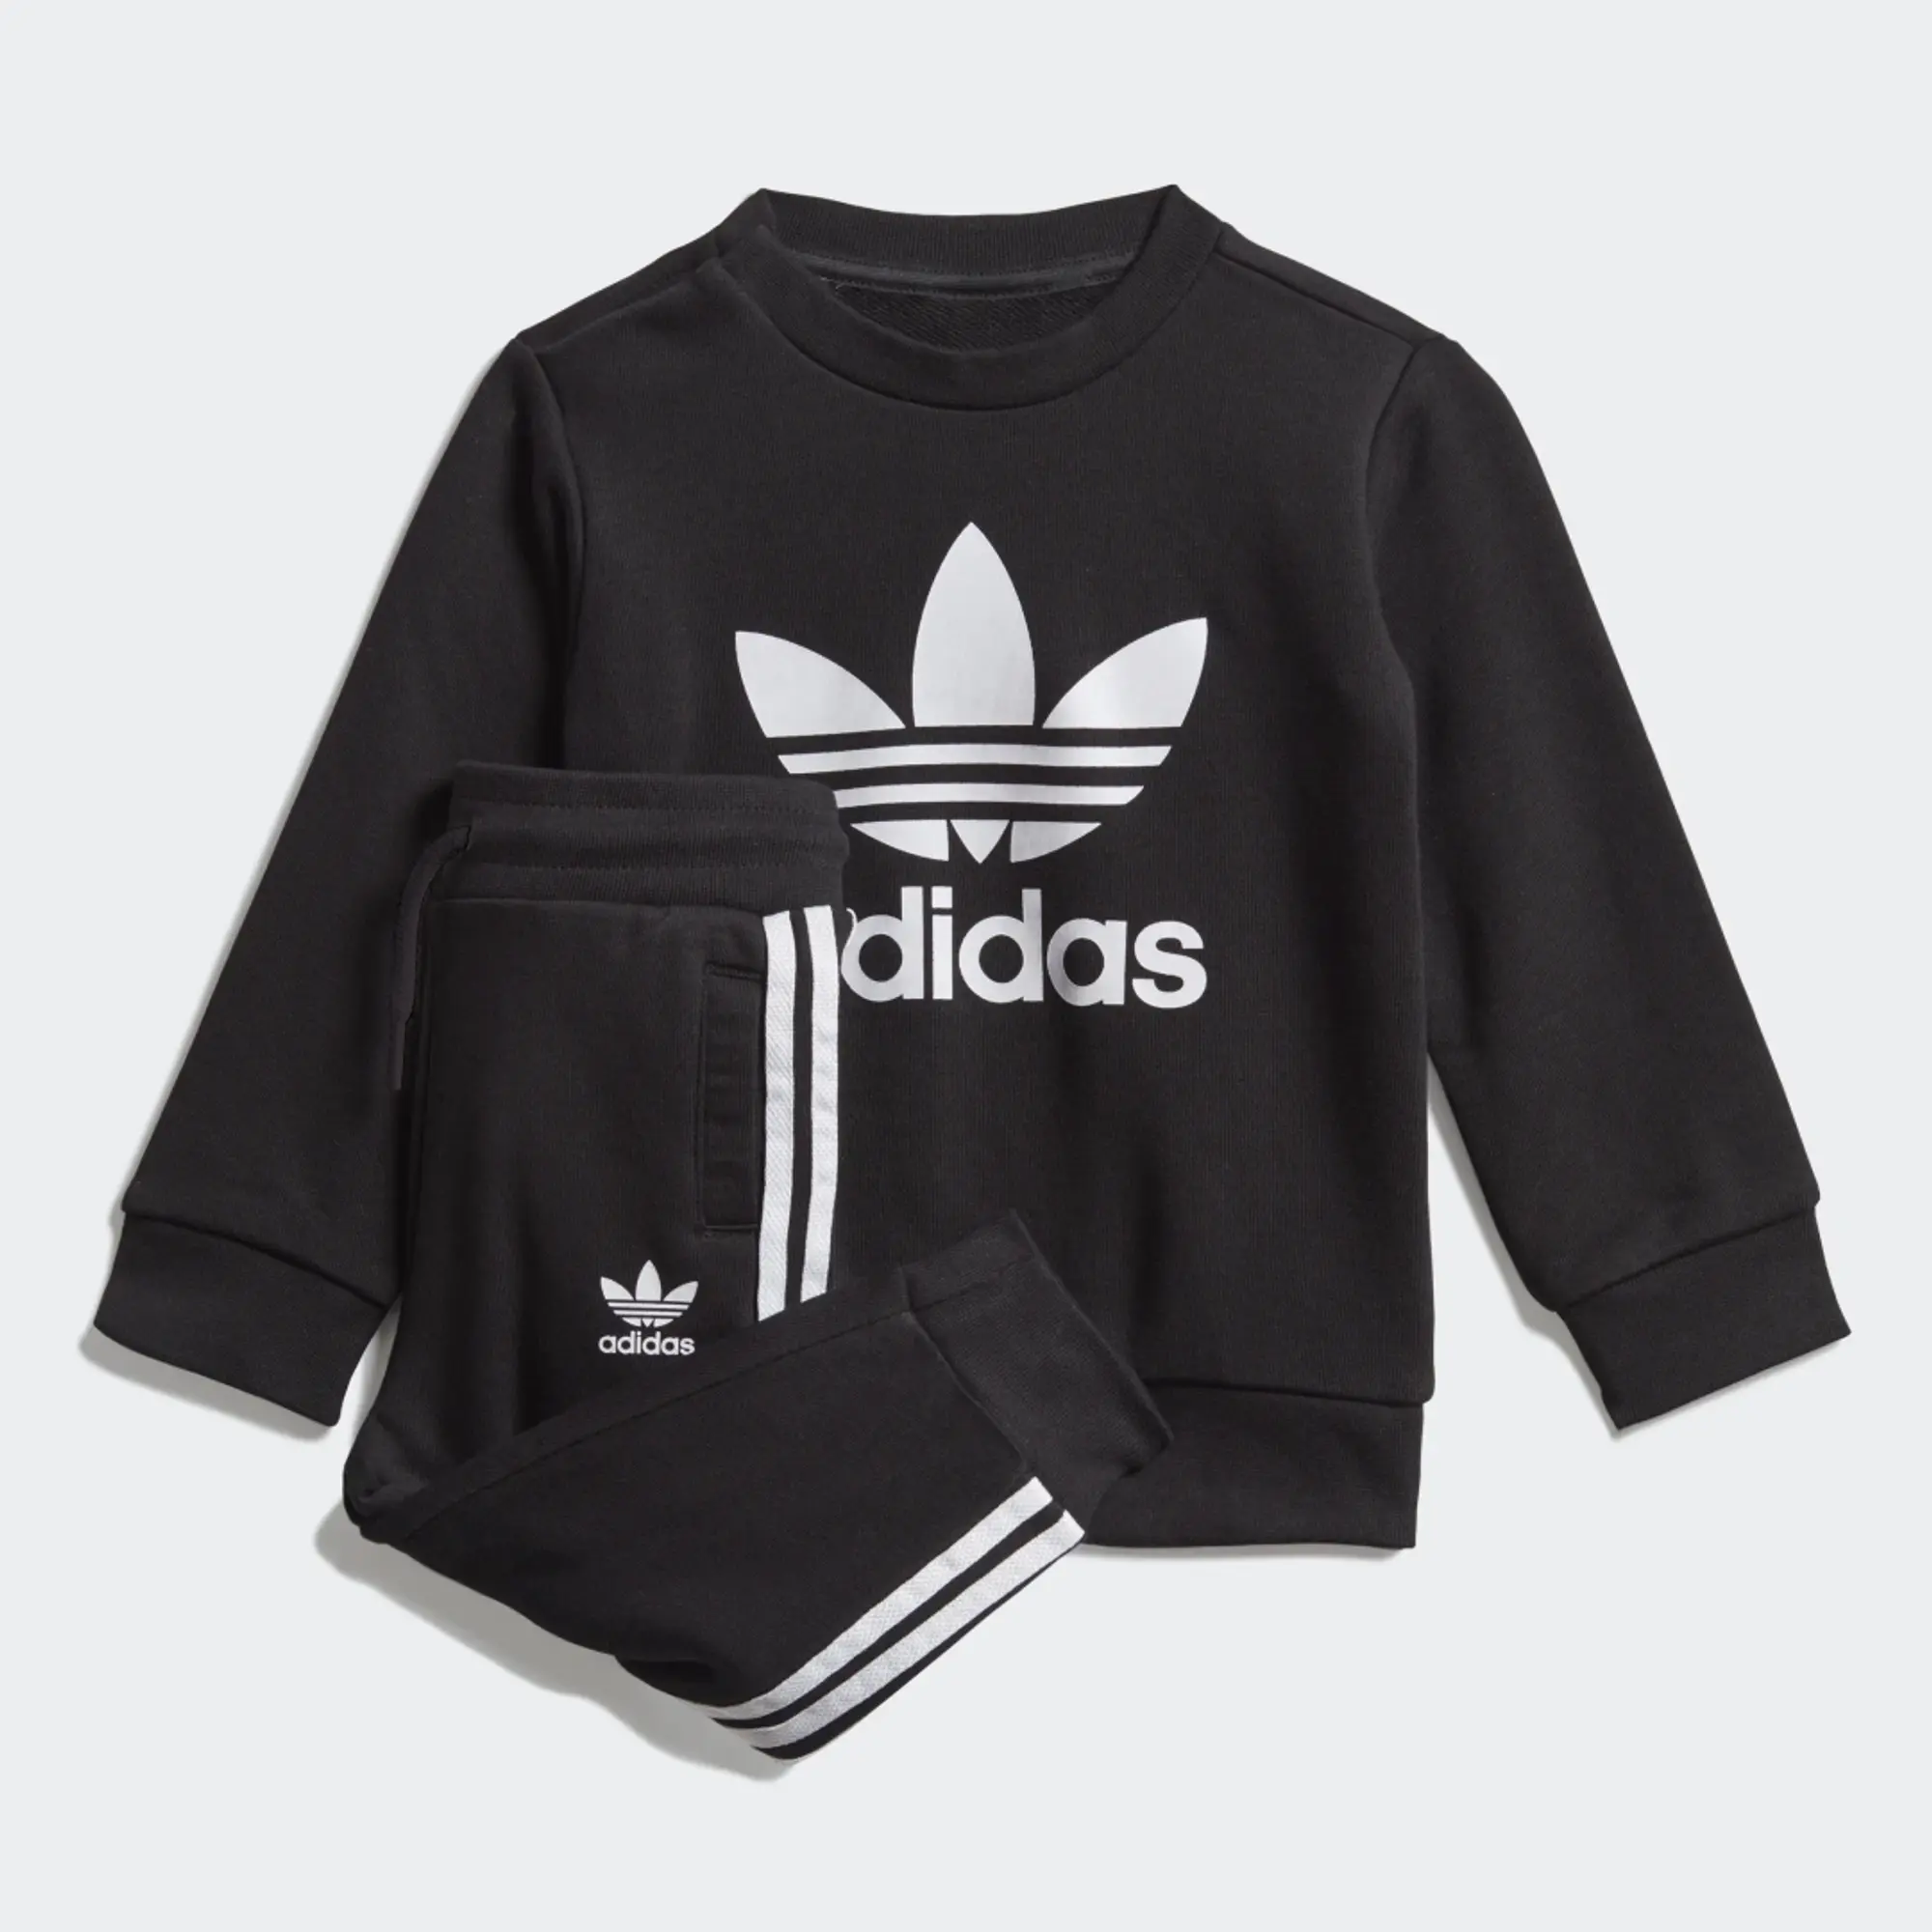 Boys, adidas Originals Crew Sweatshirt Set - Black, Black